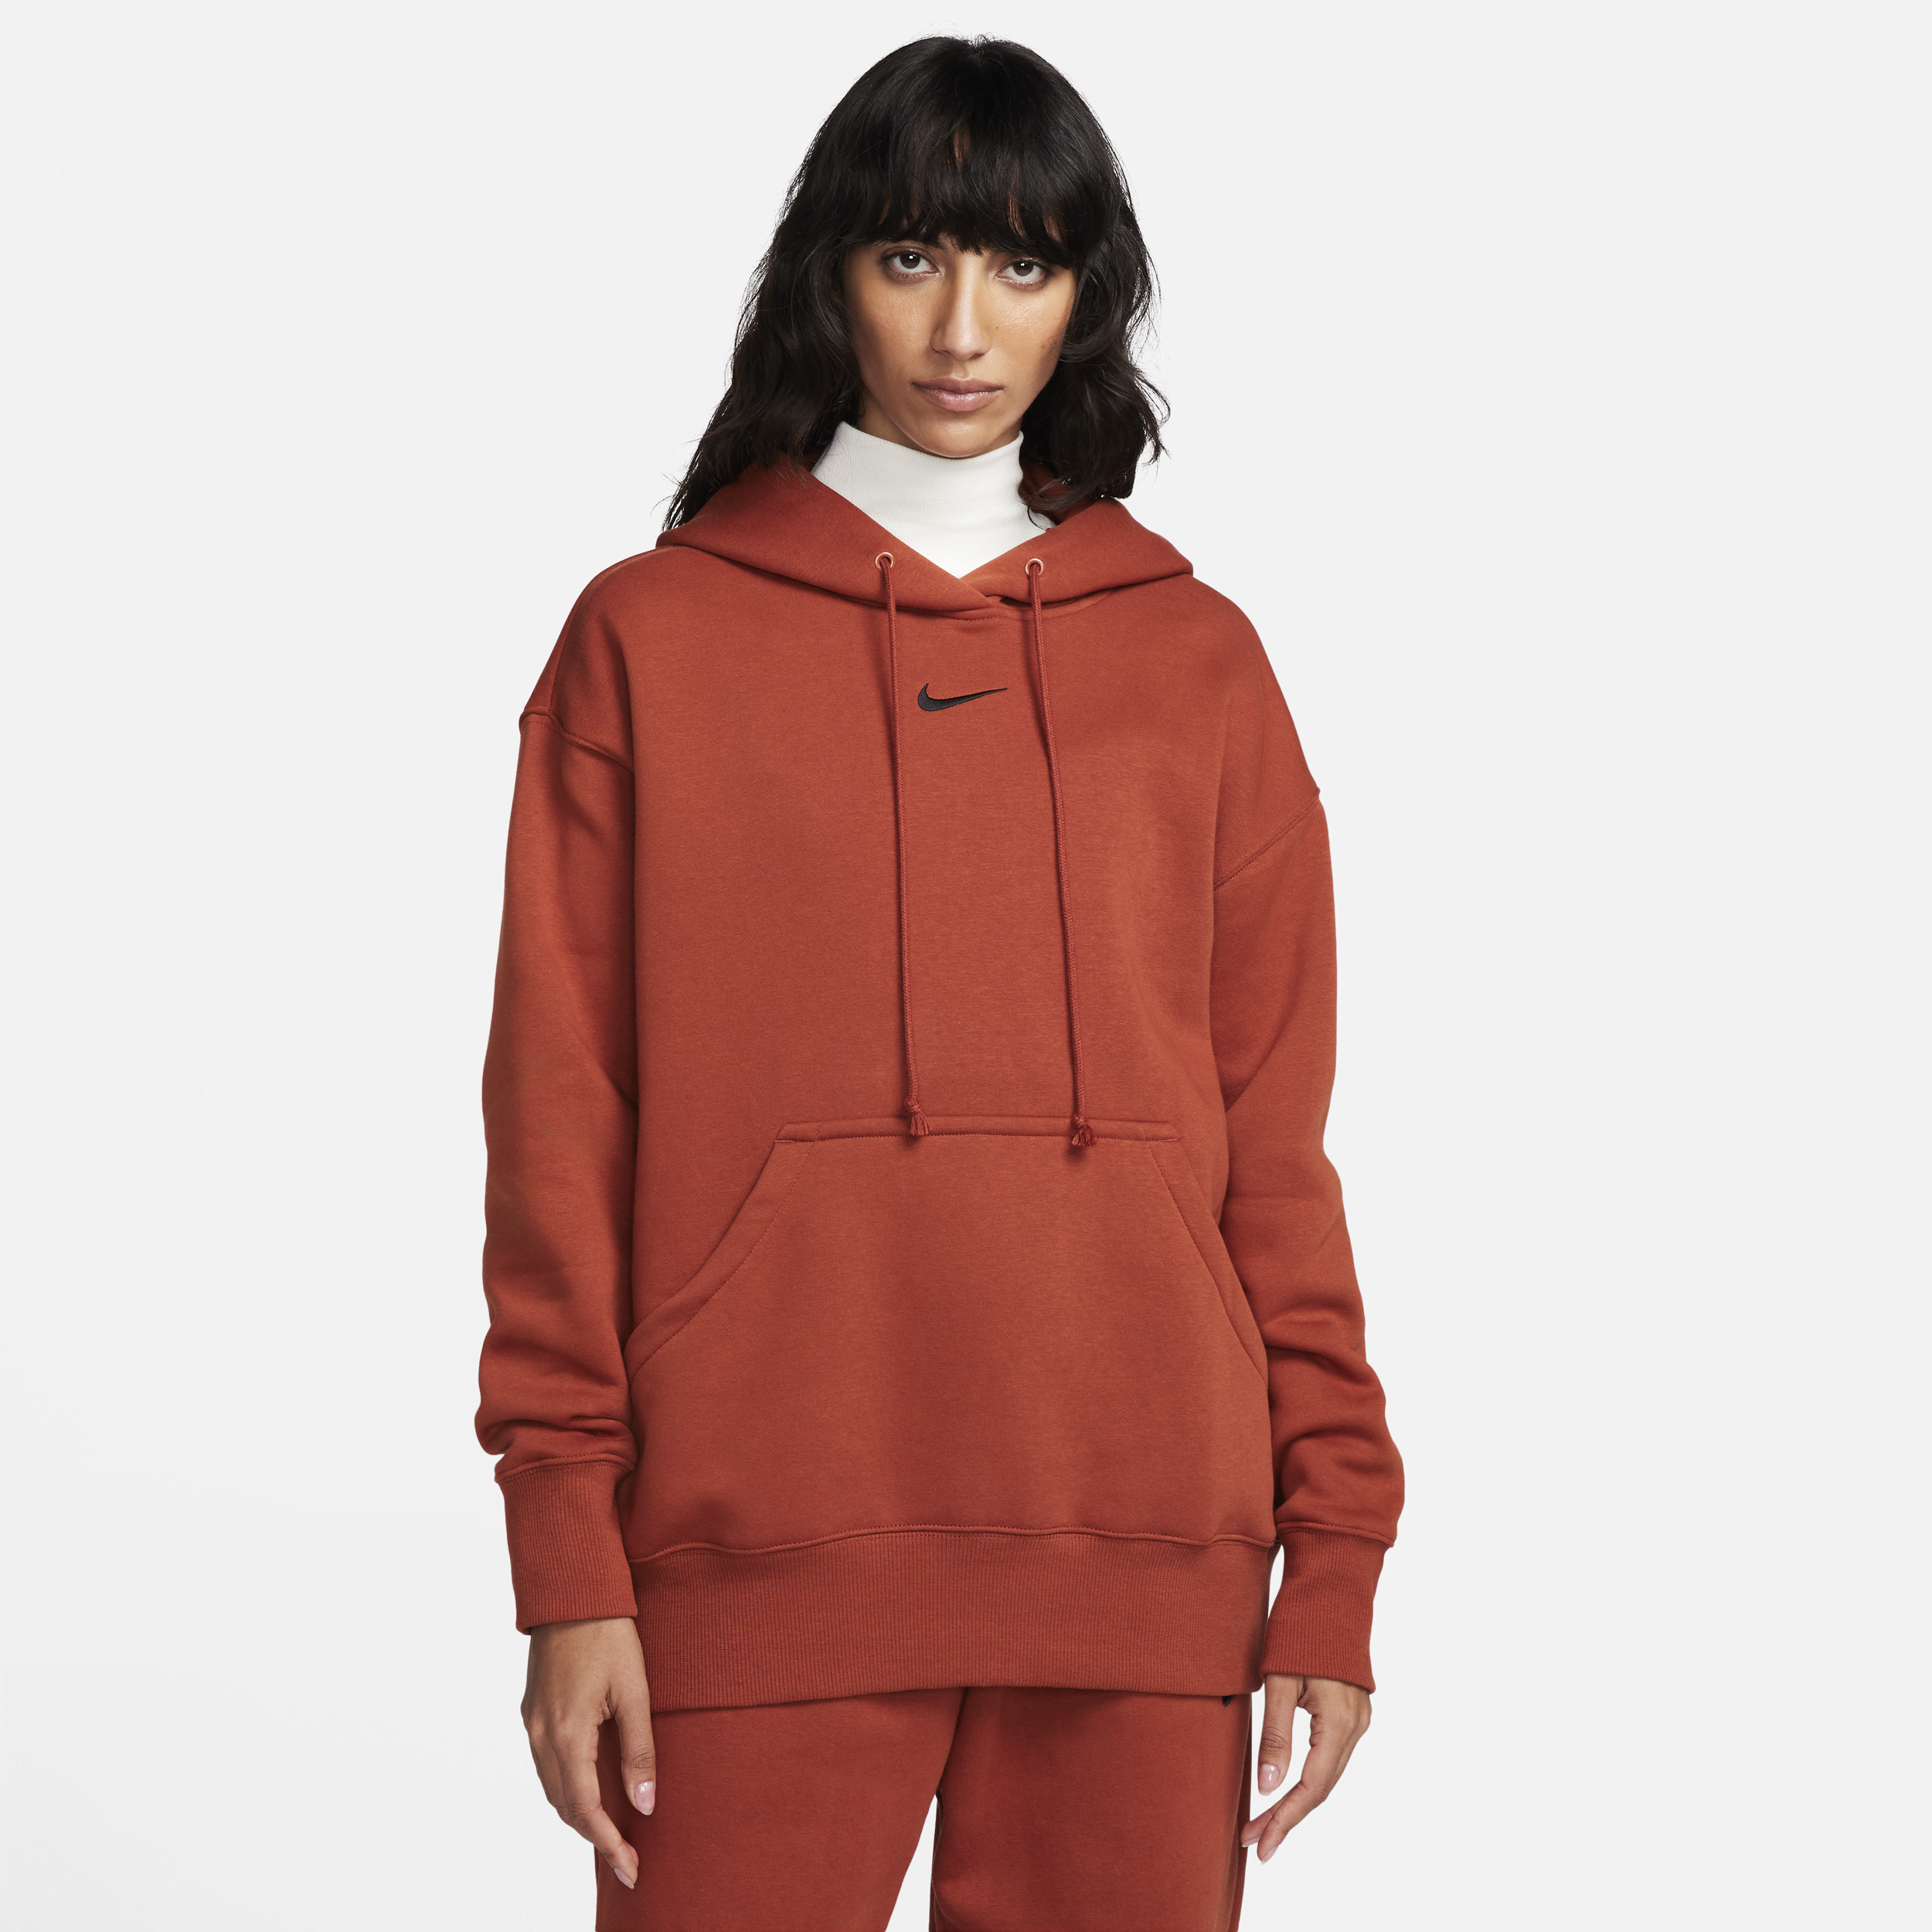 Nike Sportswear Phoenix Fleece Sudadera con capucha y ajuste oversize - Mujer - Naranja